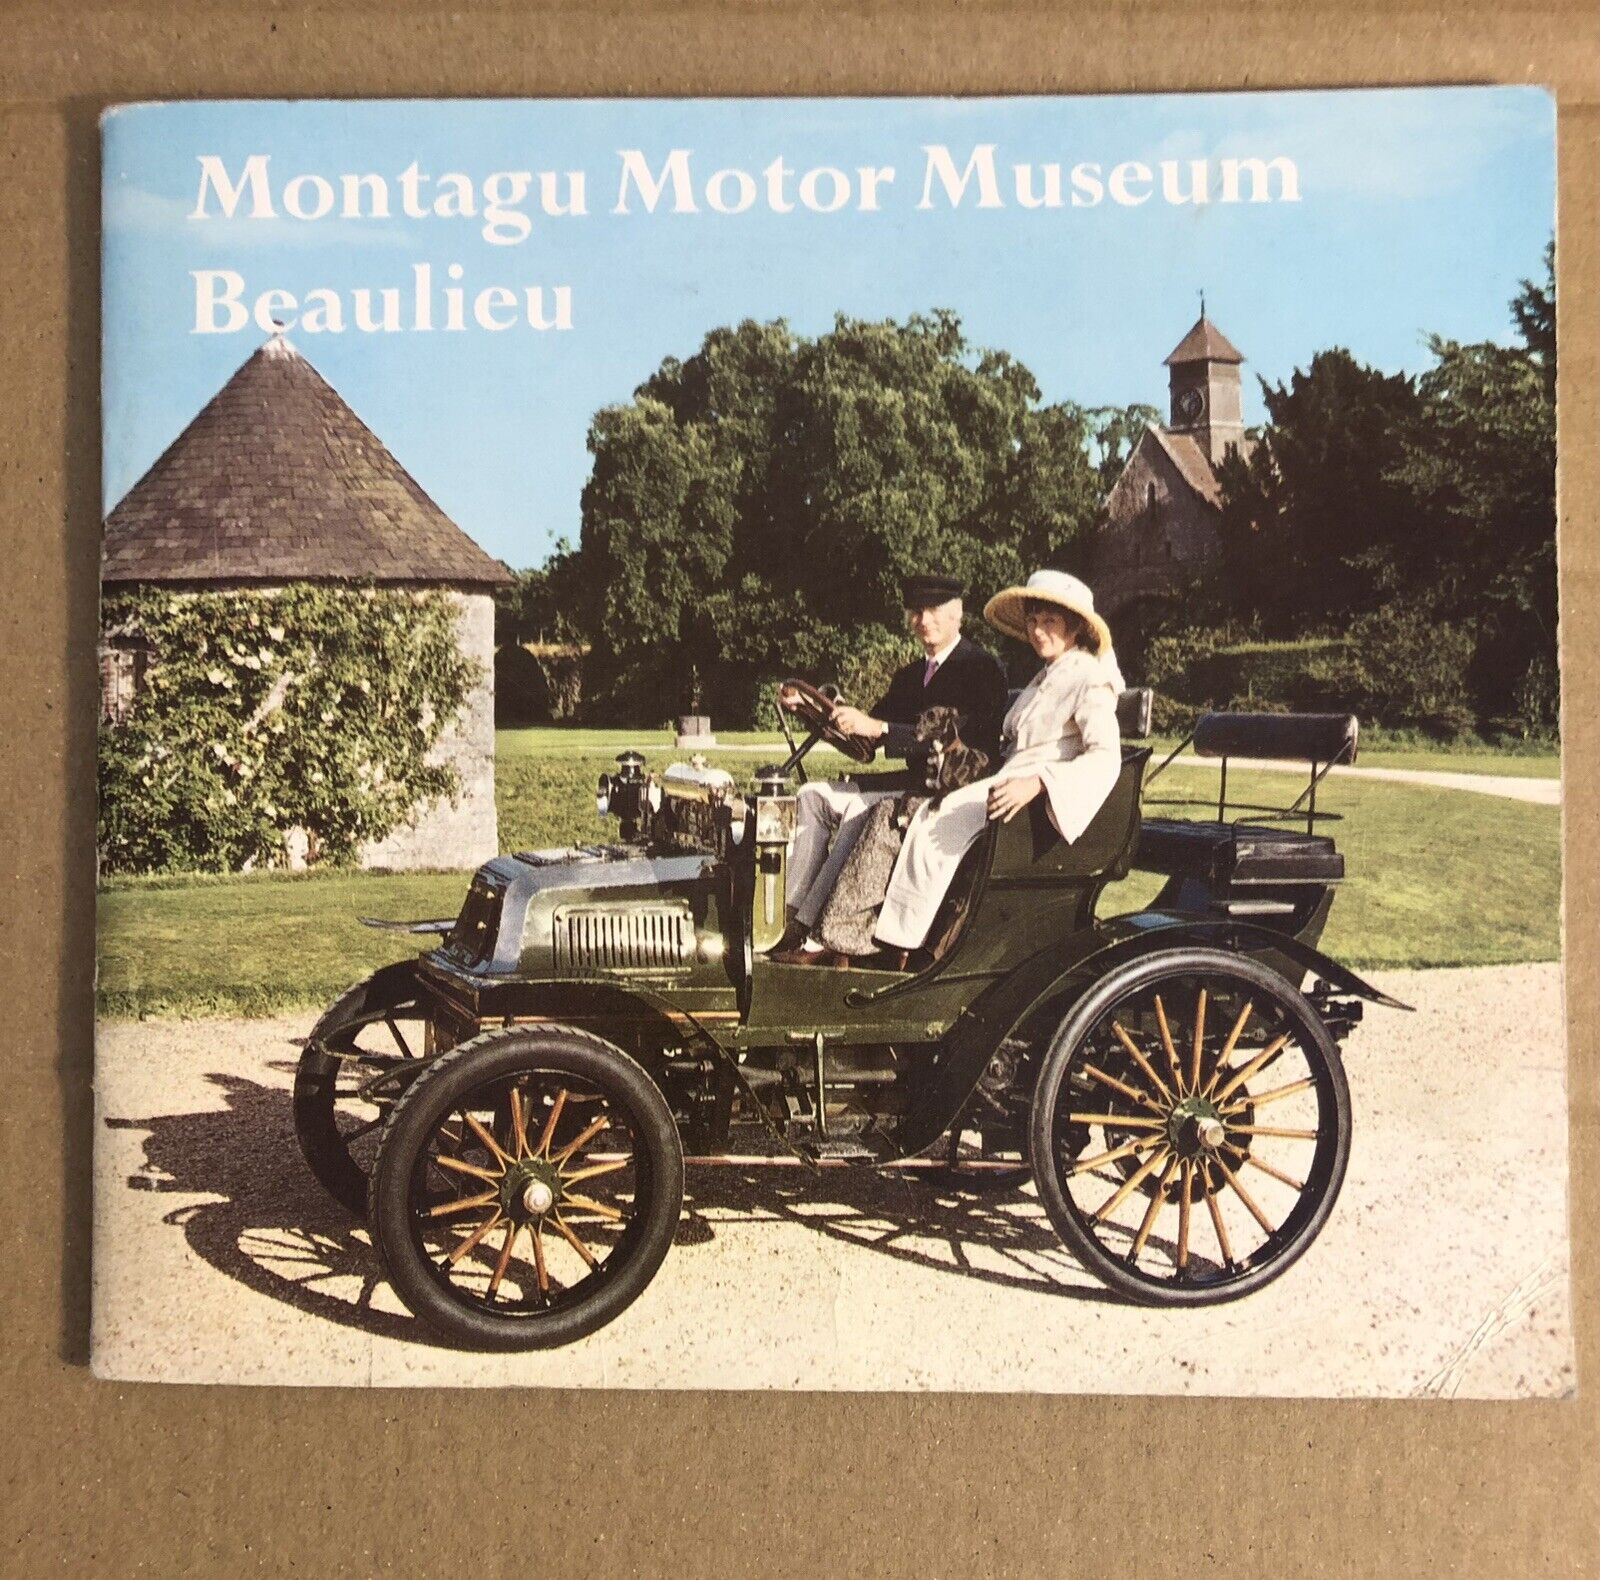 VINTAGE 1970 MONTAGU MOTOR MUSEUM BEAULIEU – PICTORIAL BROCHURE - VGC